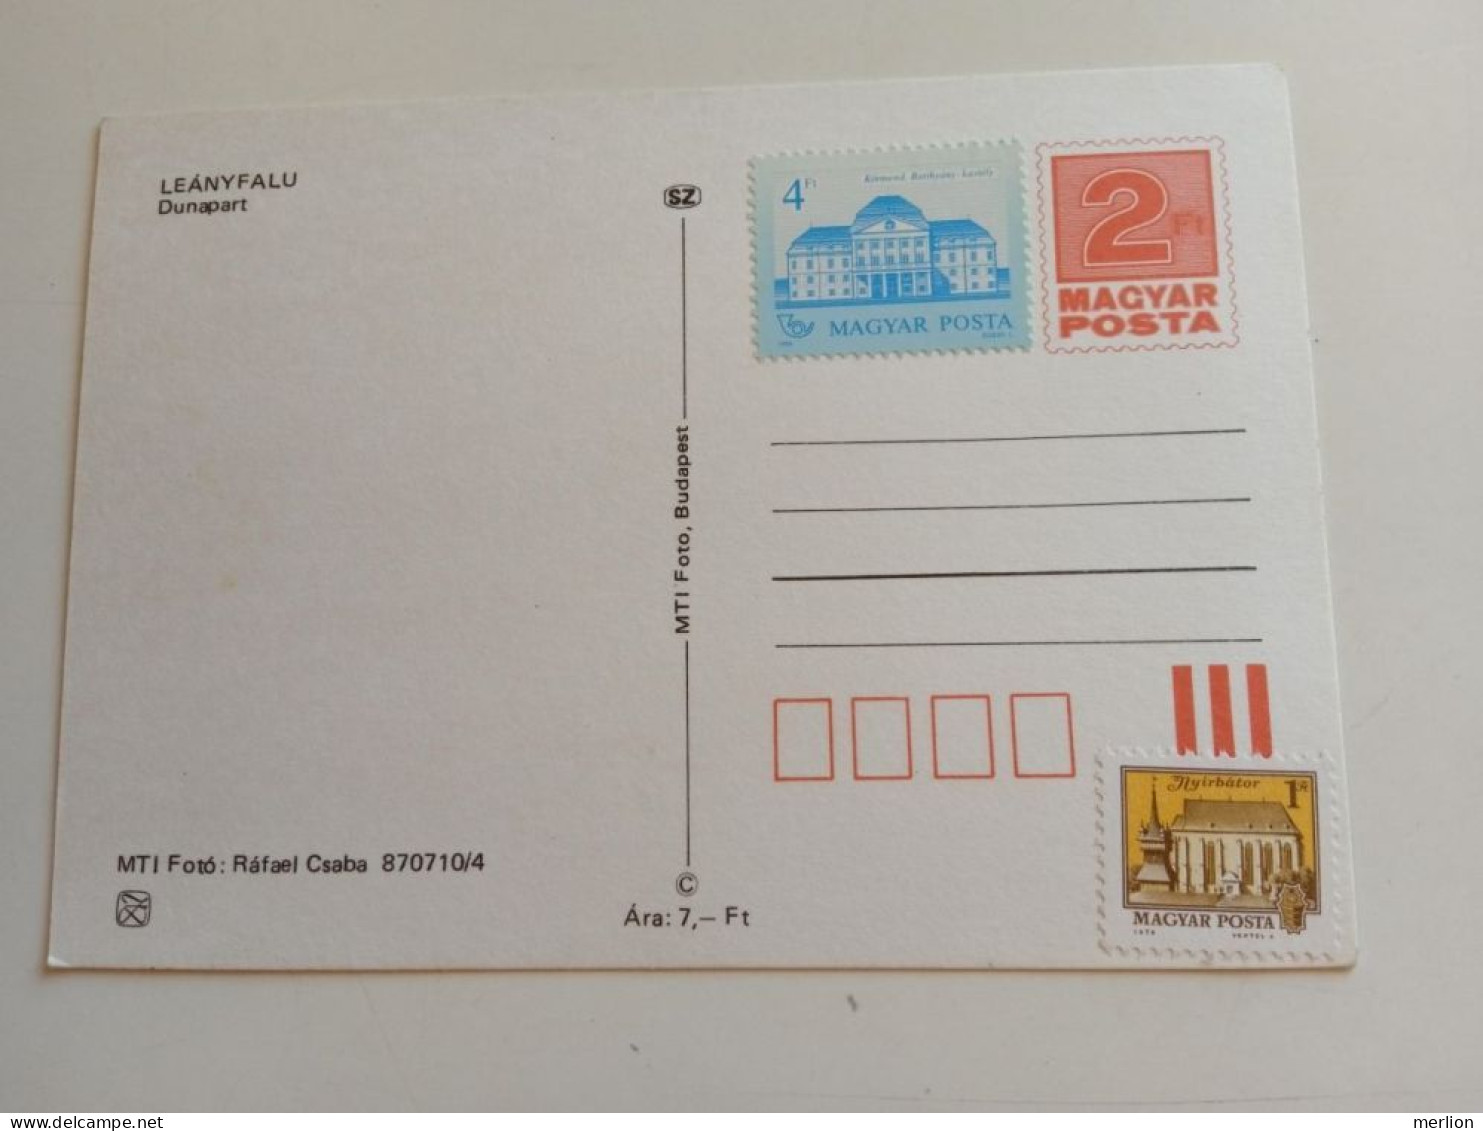 D202889 Hungary Postal Stationery Entier -Ganzsache - 2 Ft   MTI Ráfael Csaba -870710/4 Leányfalu - Dunapart - Postal Stationery